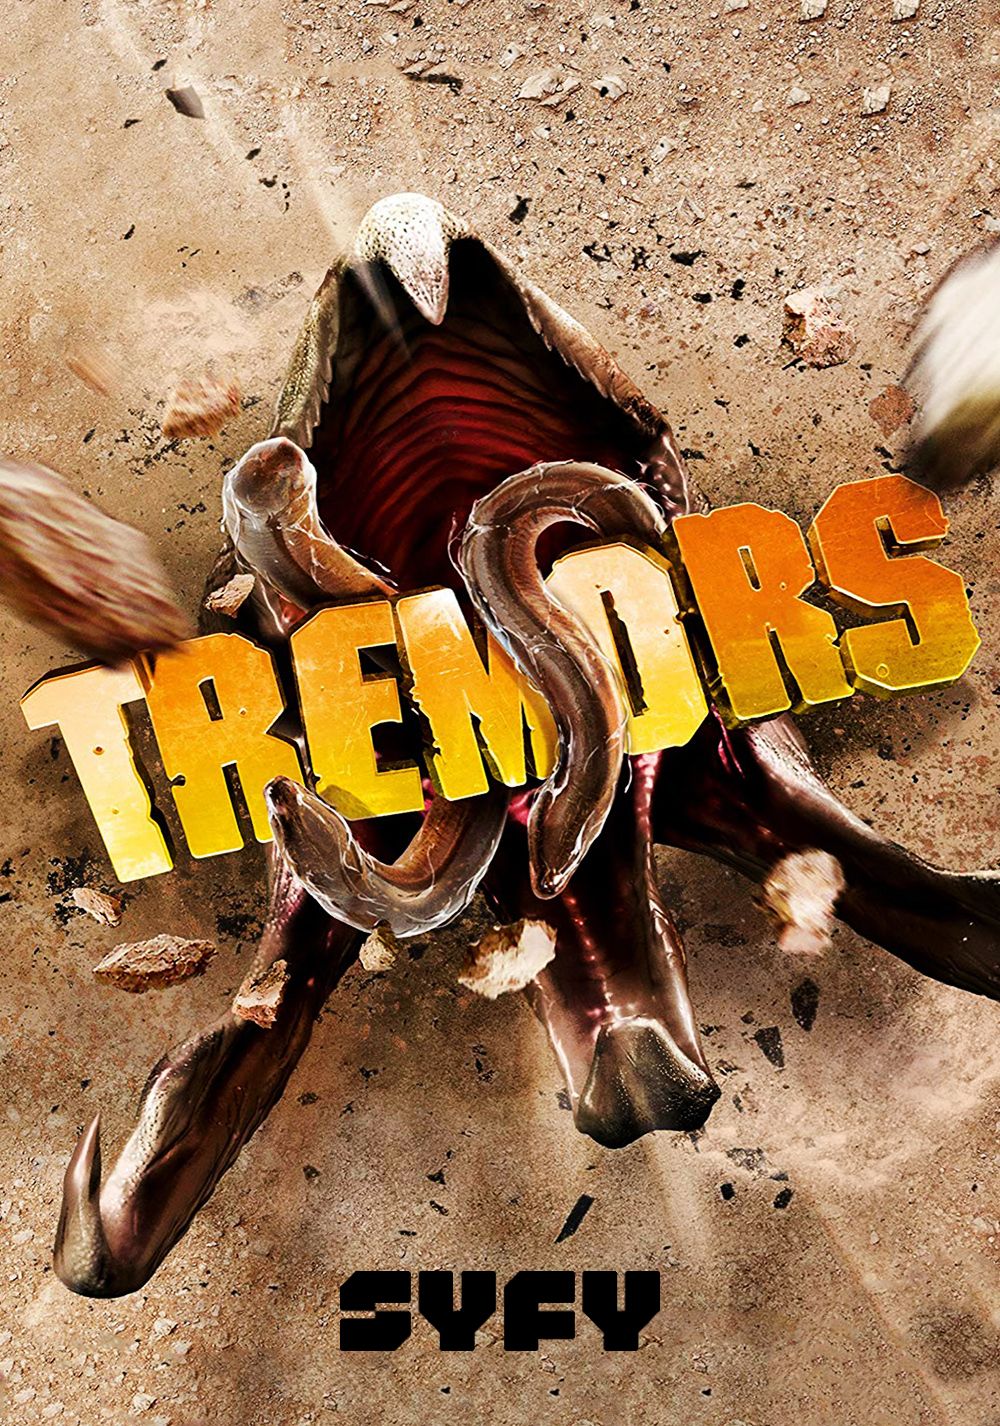 Tremors (1990)  Movie posters, Bizarre movie, Film posters